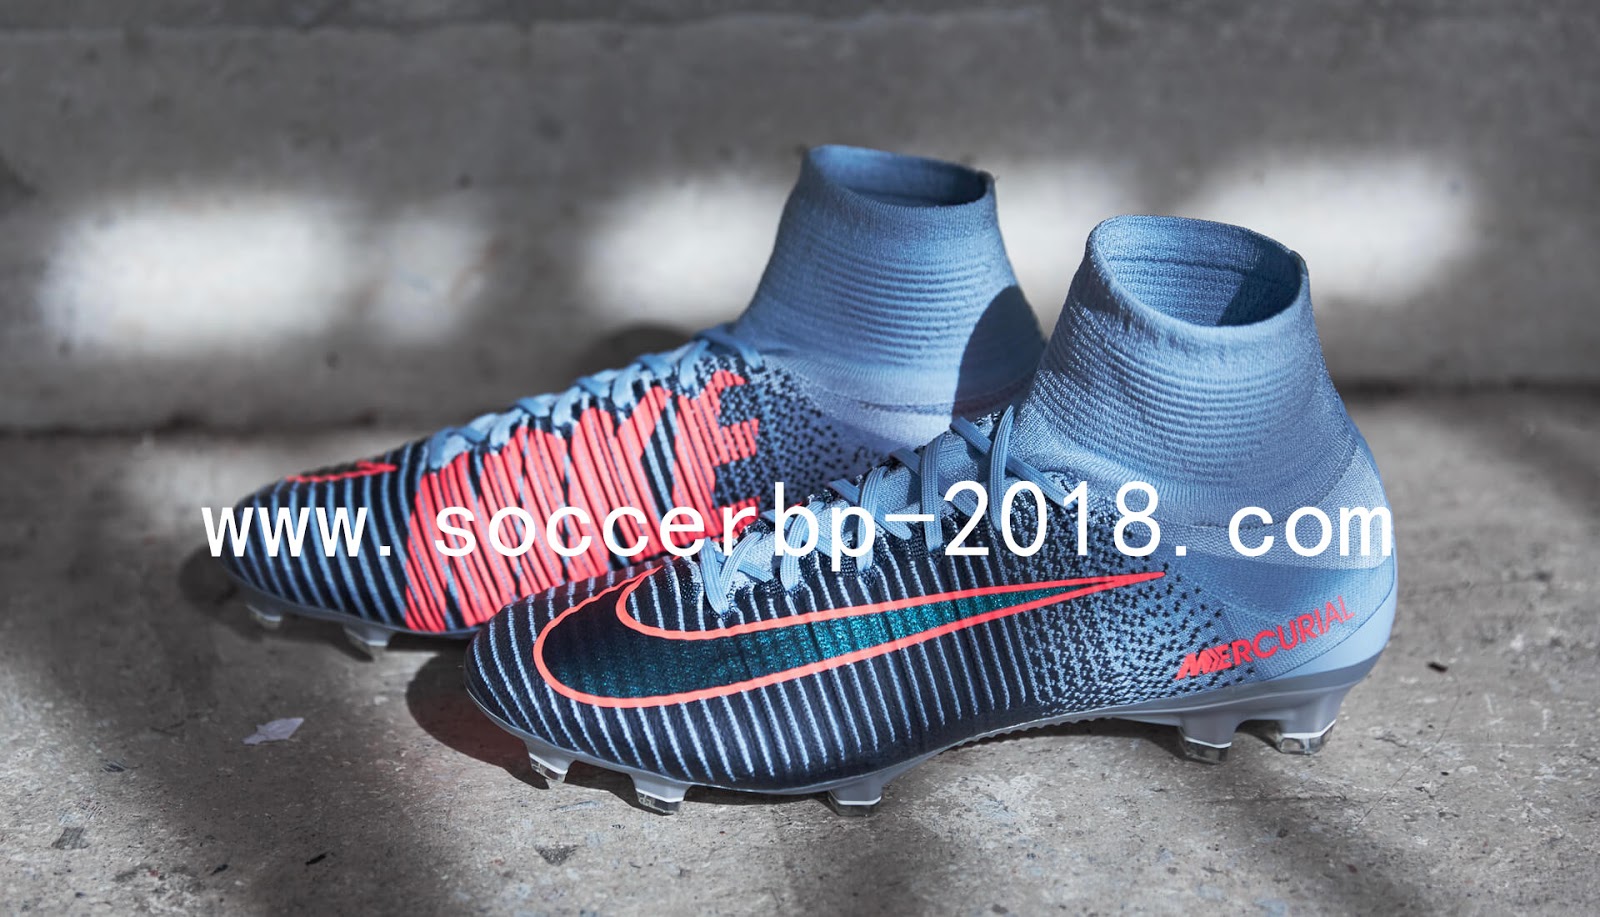 Speed Football Boots Nike Mercurial Vapor V Orion Blue